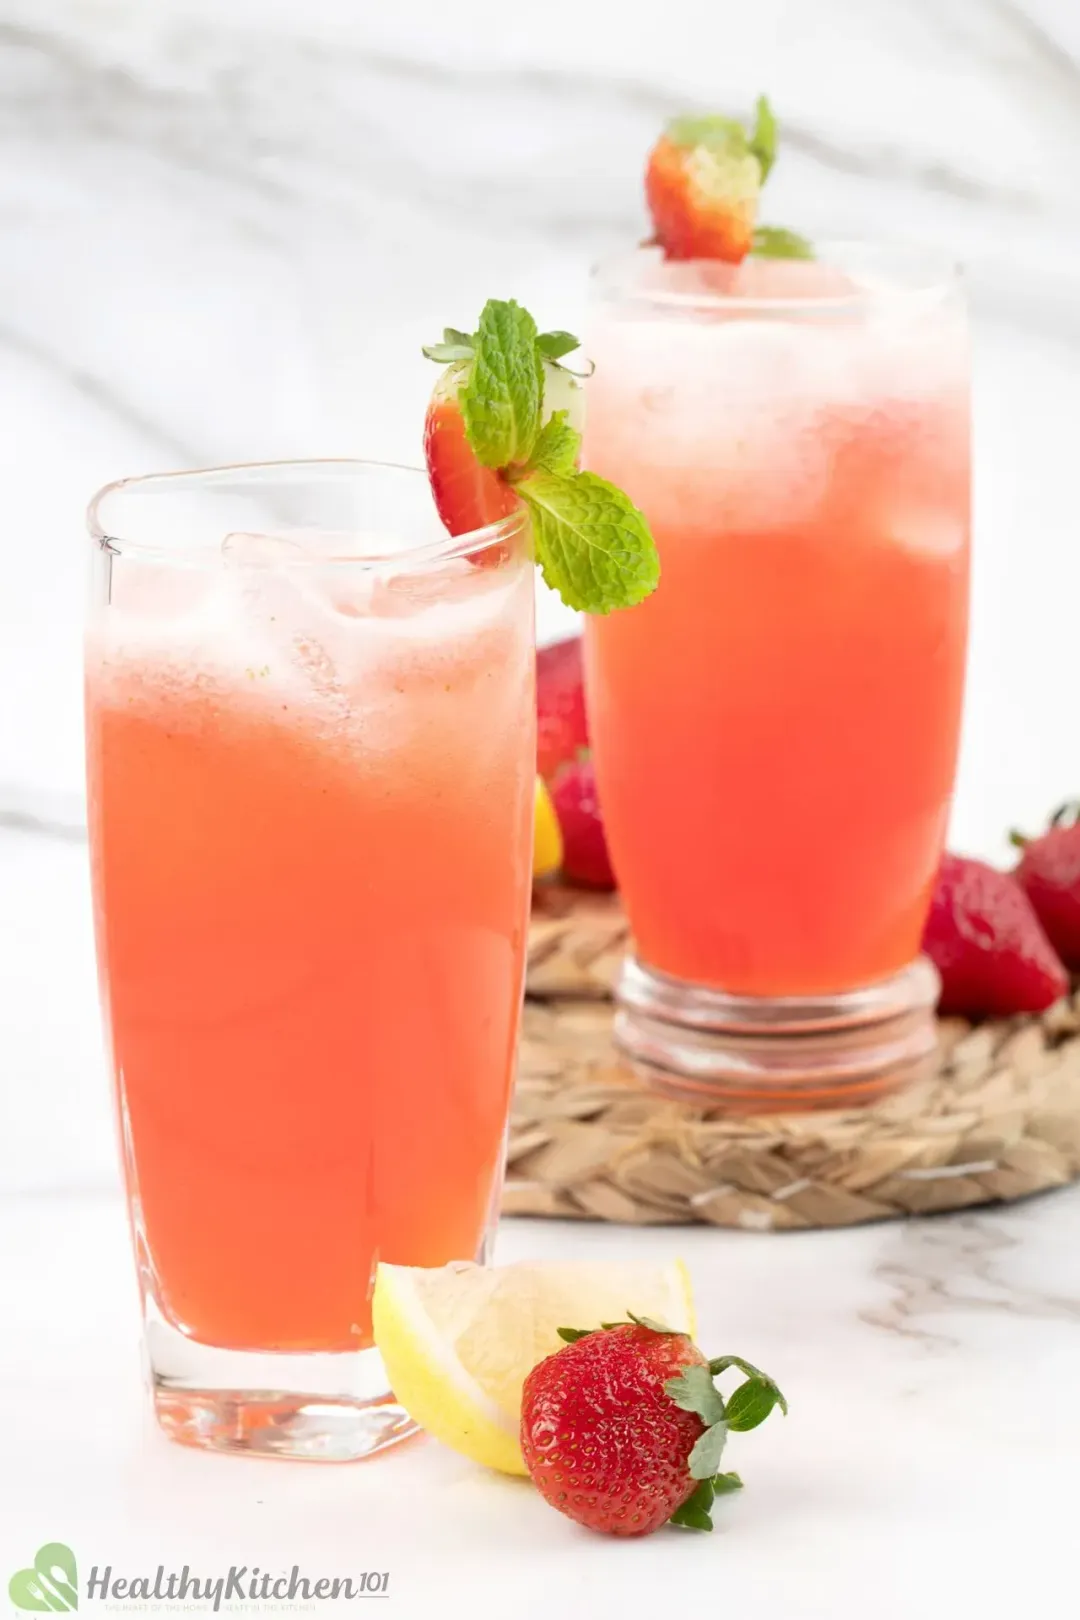 Is Strawberry Lemonade Healthy